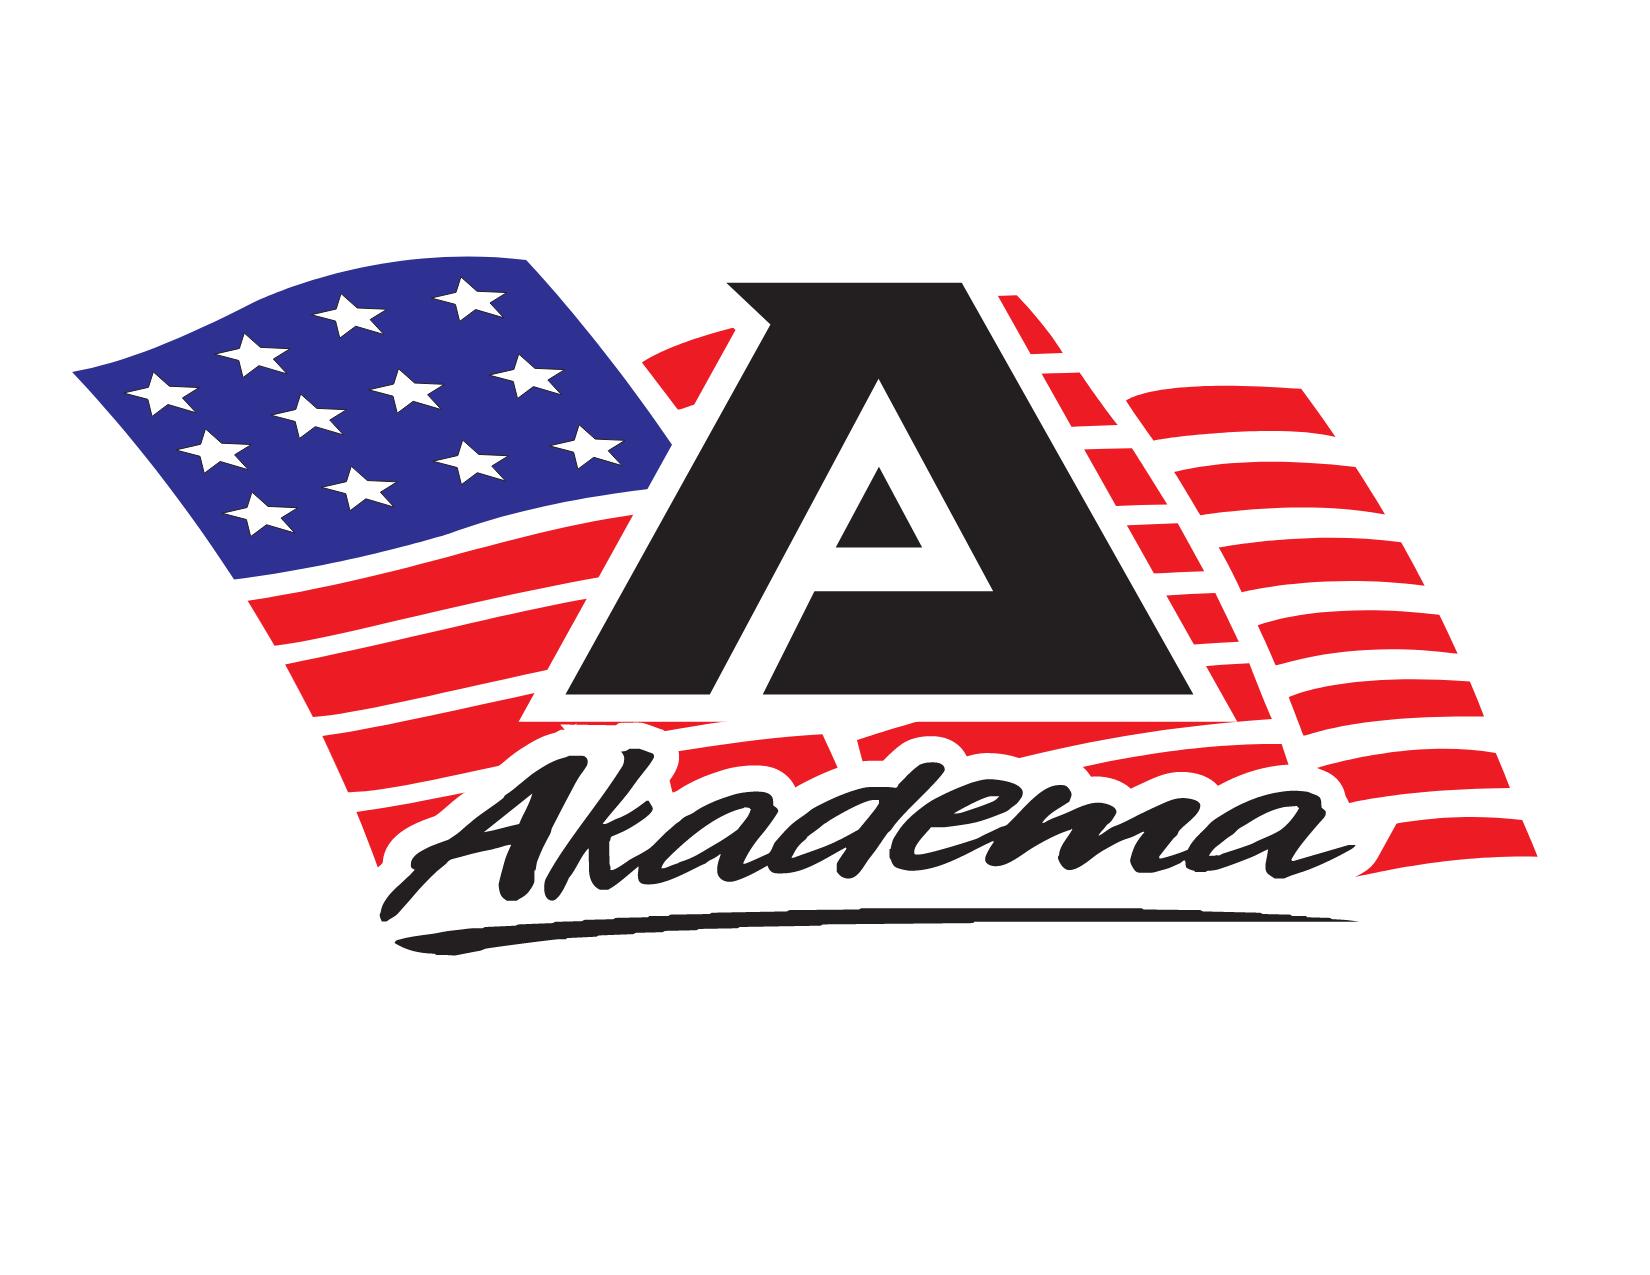 Akadema's ARA 93 Ranked #1 By Pintarpress.com